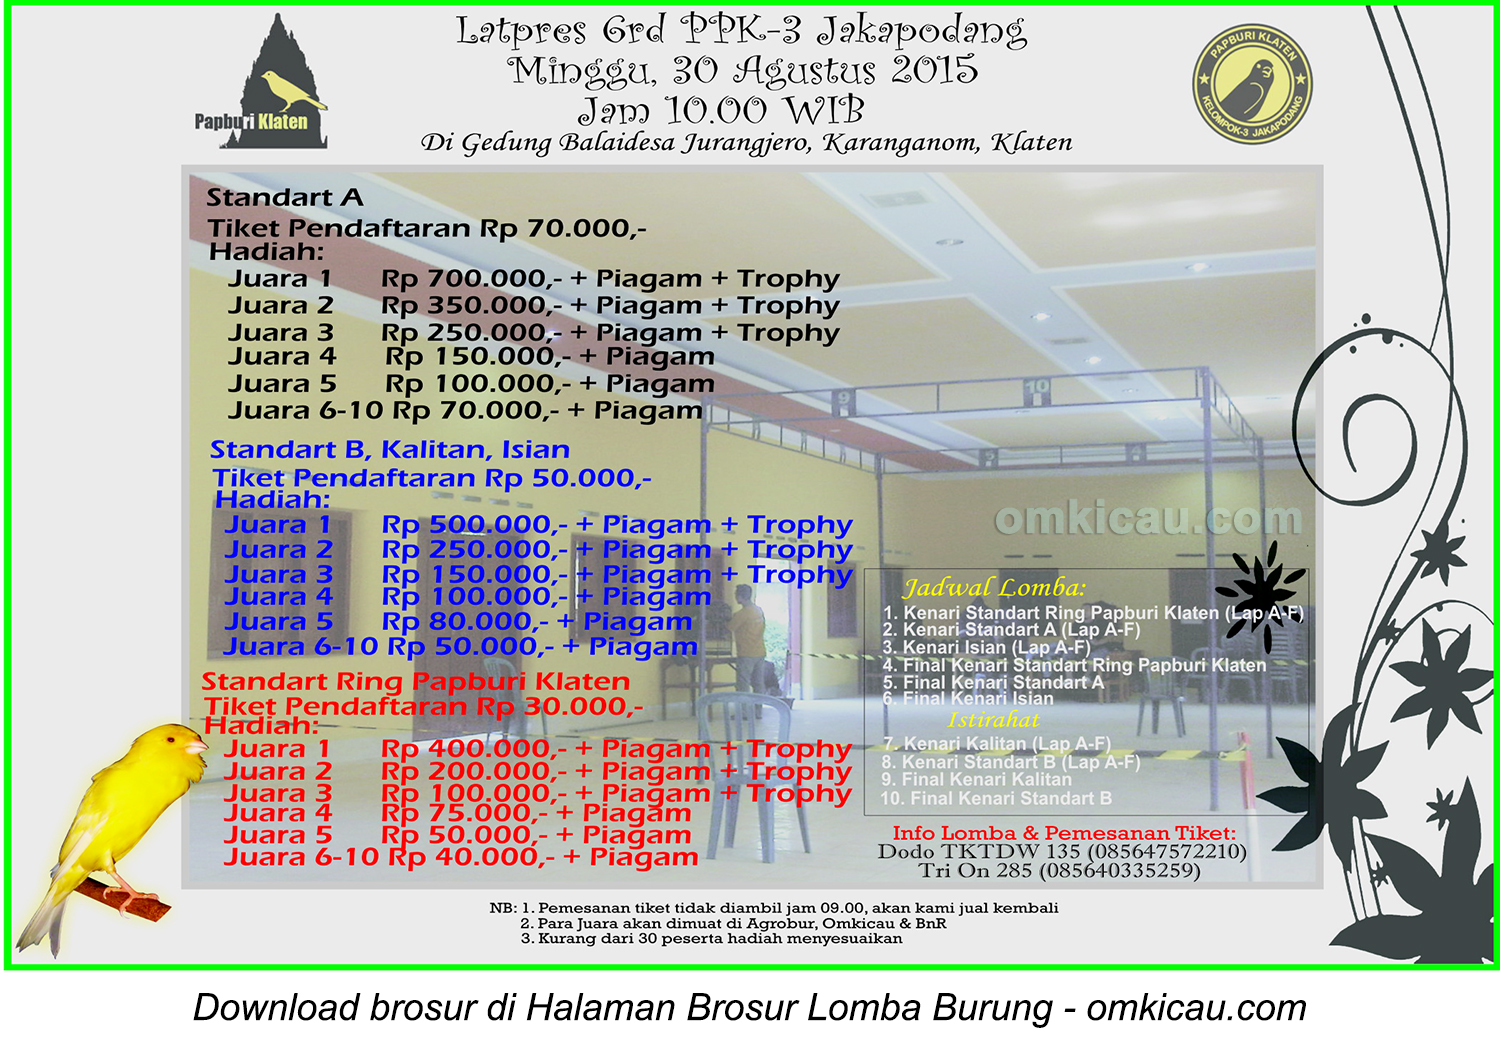 Brosur Latpres PPK-3 Jakapodang Papburi Klaten, 30 Agustus 2015